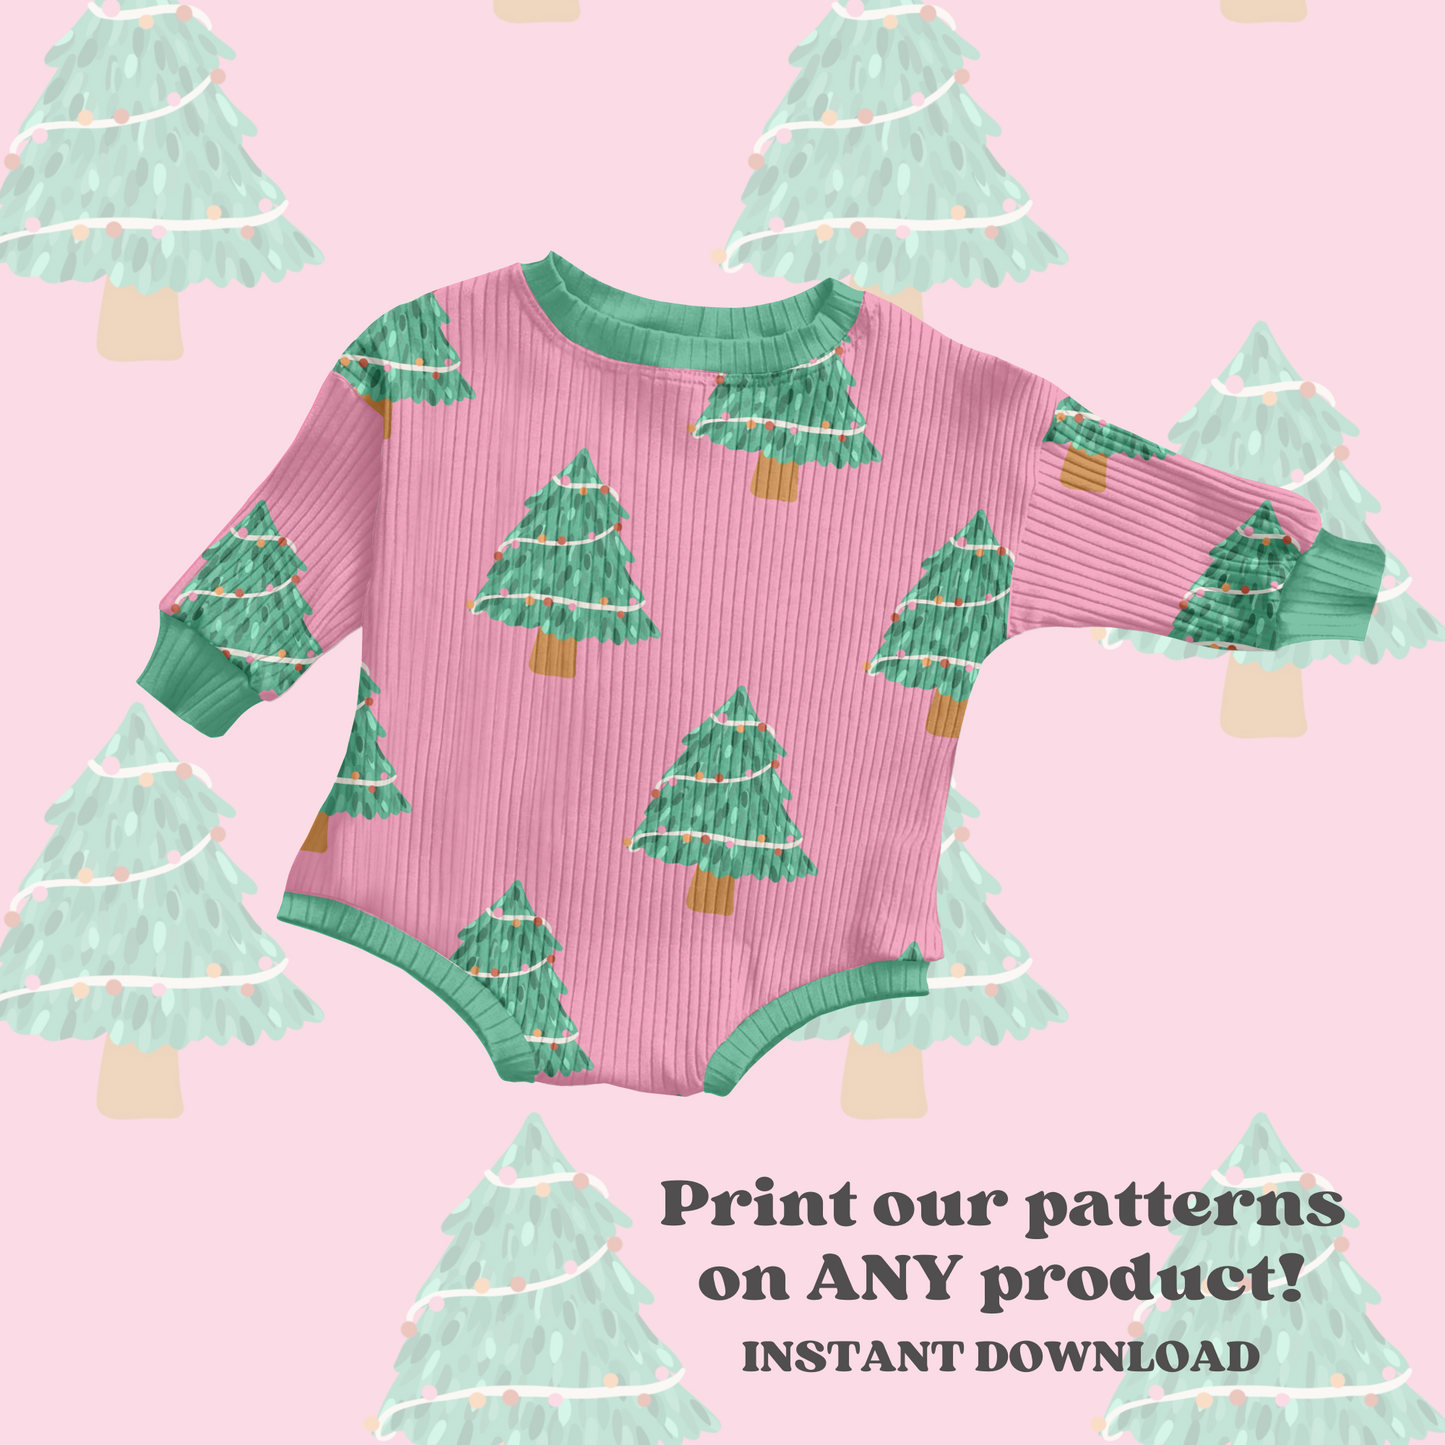 Pink Christmas trees seamless pattern